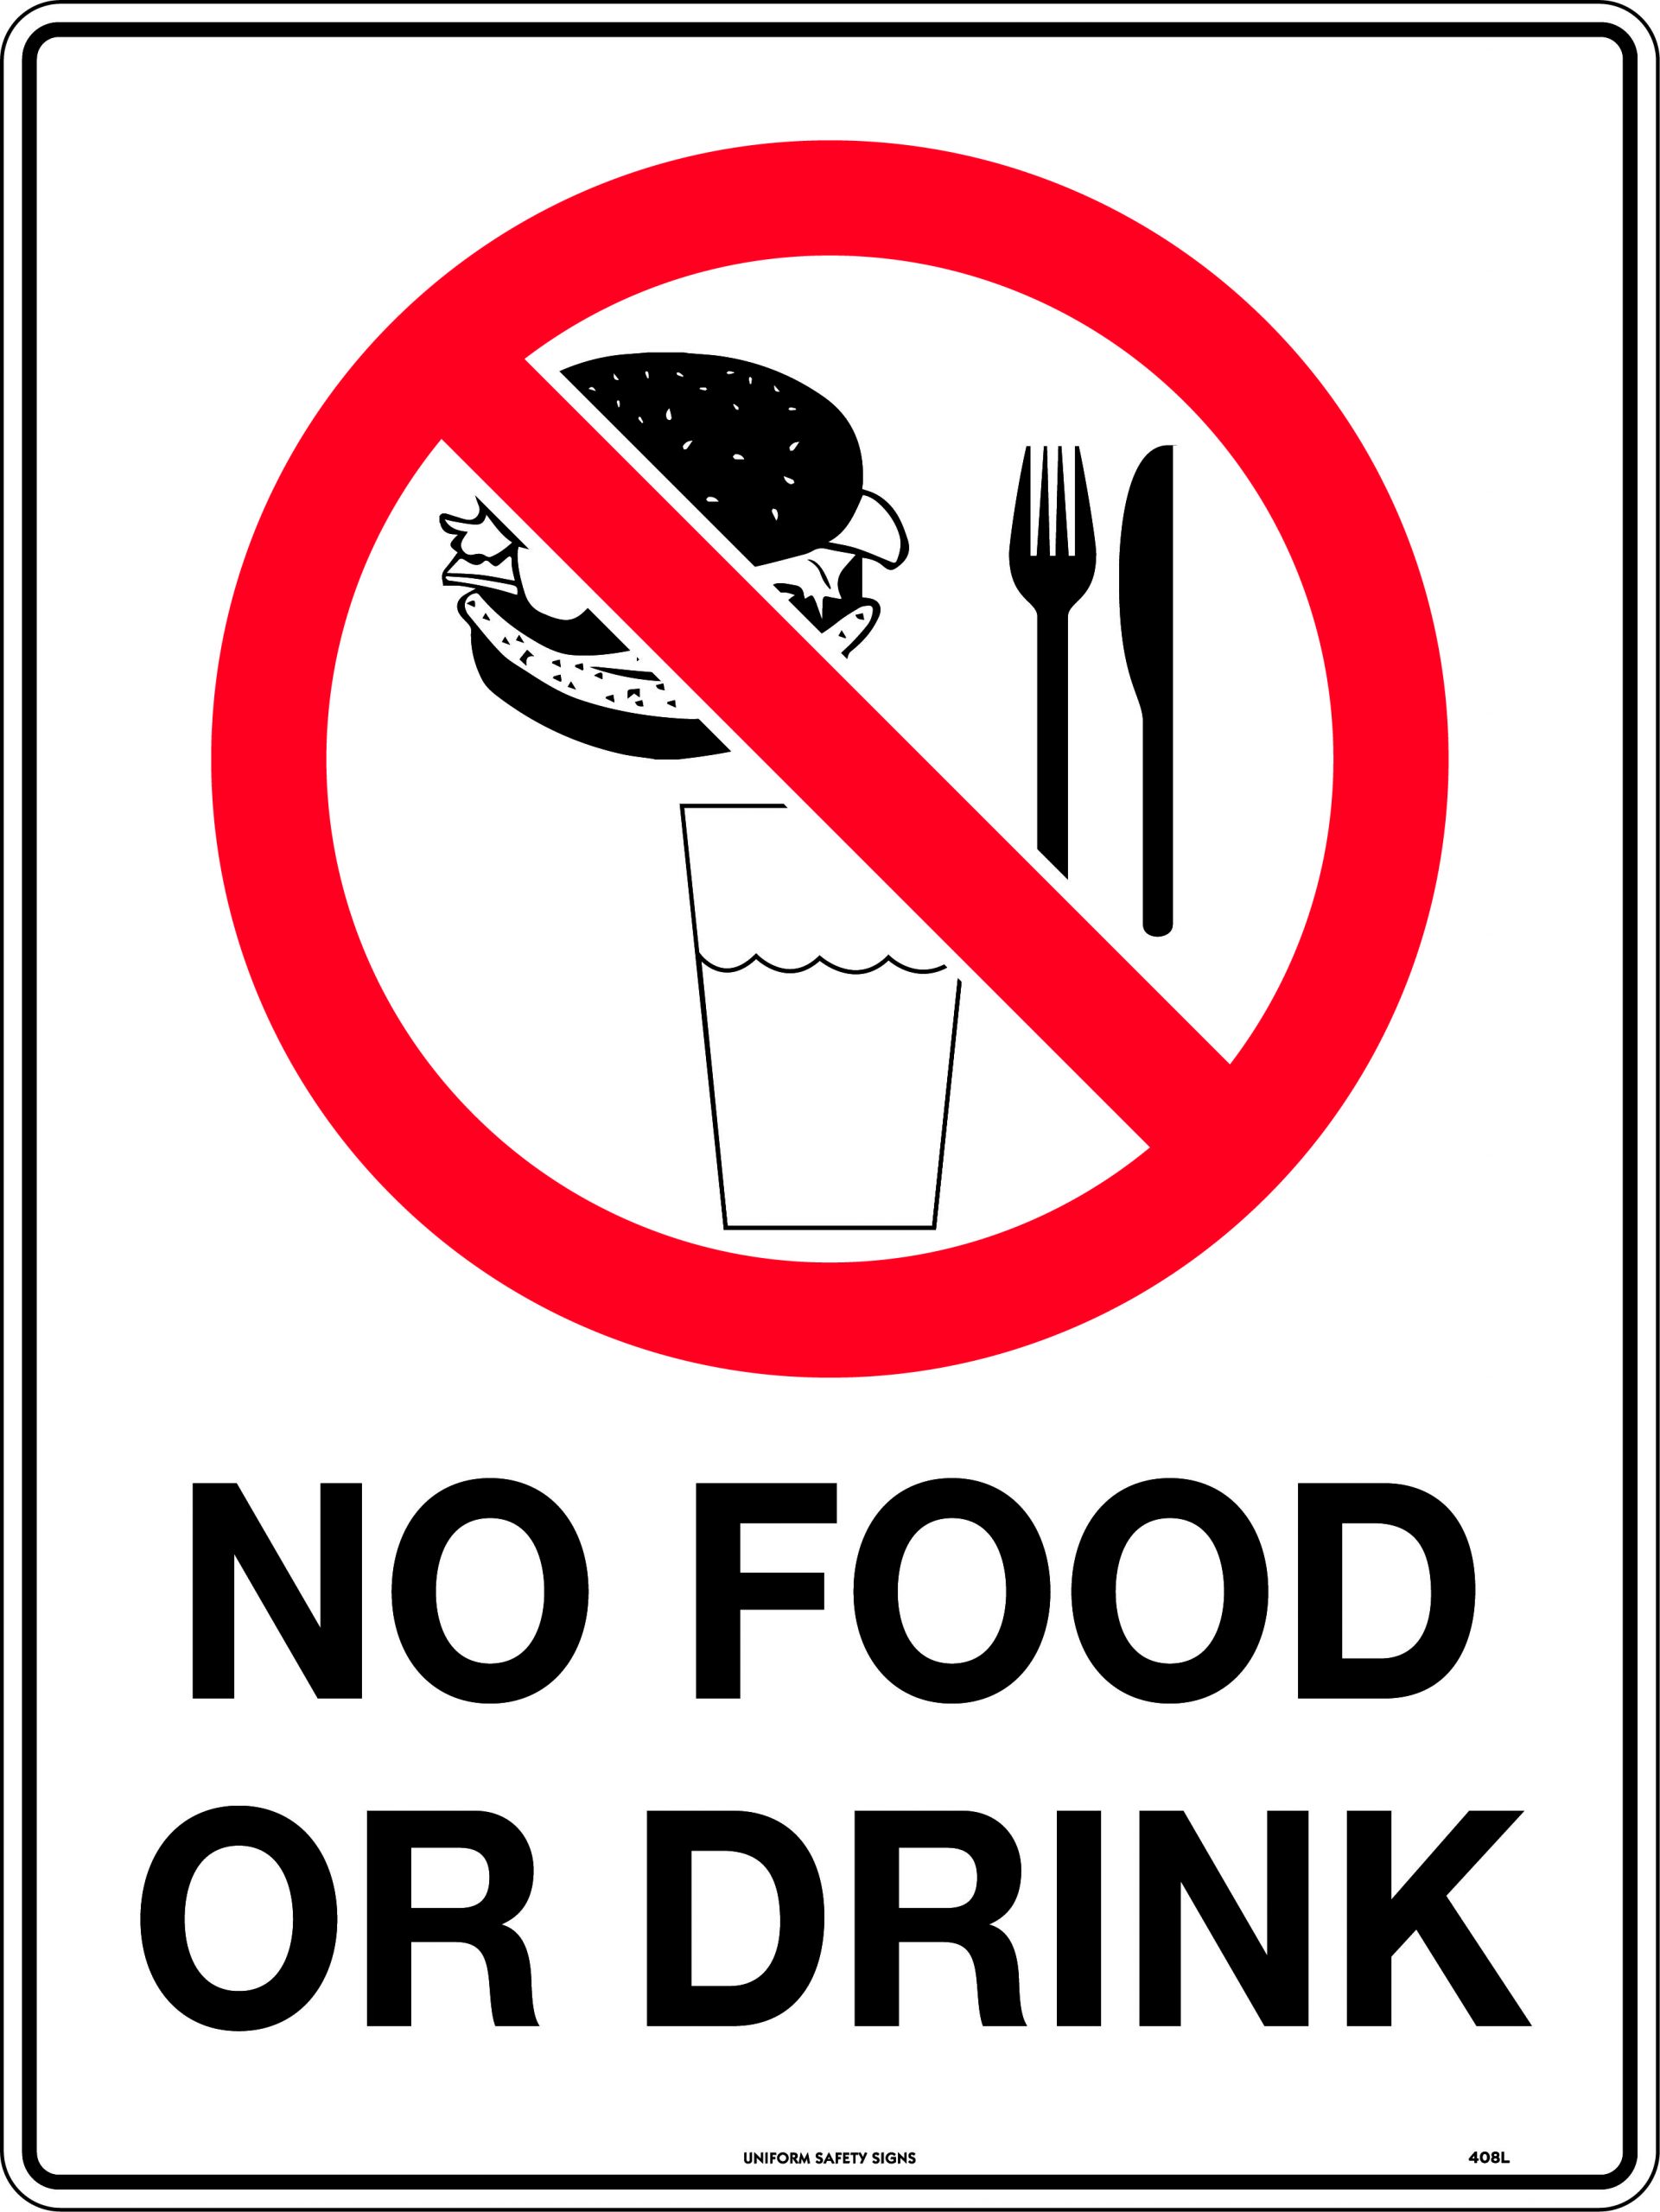 No food or drink sign